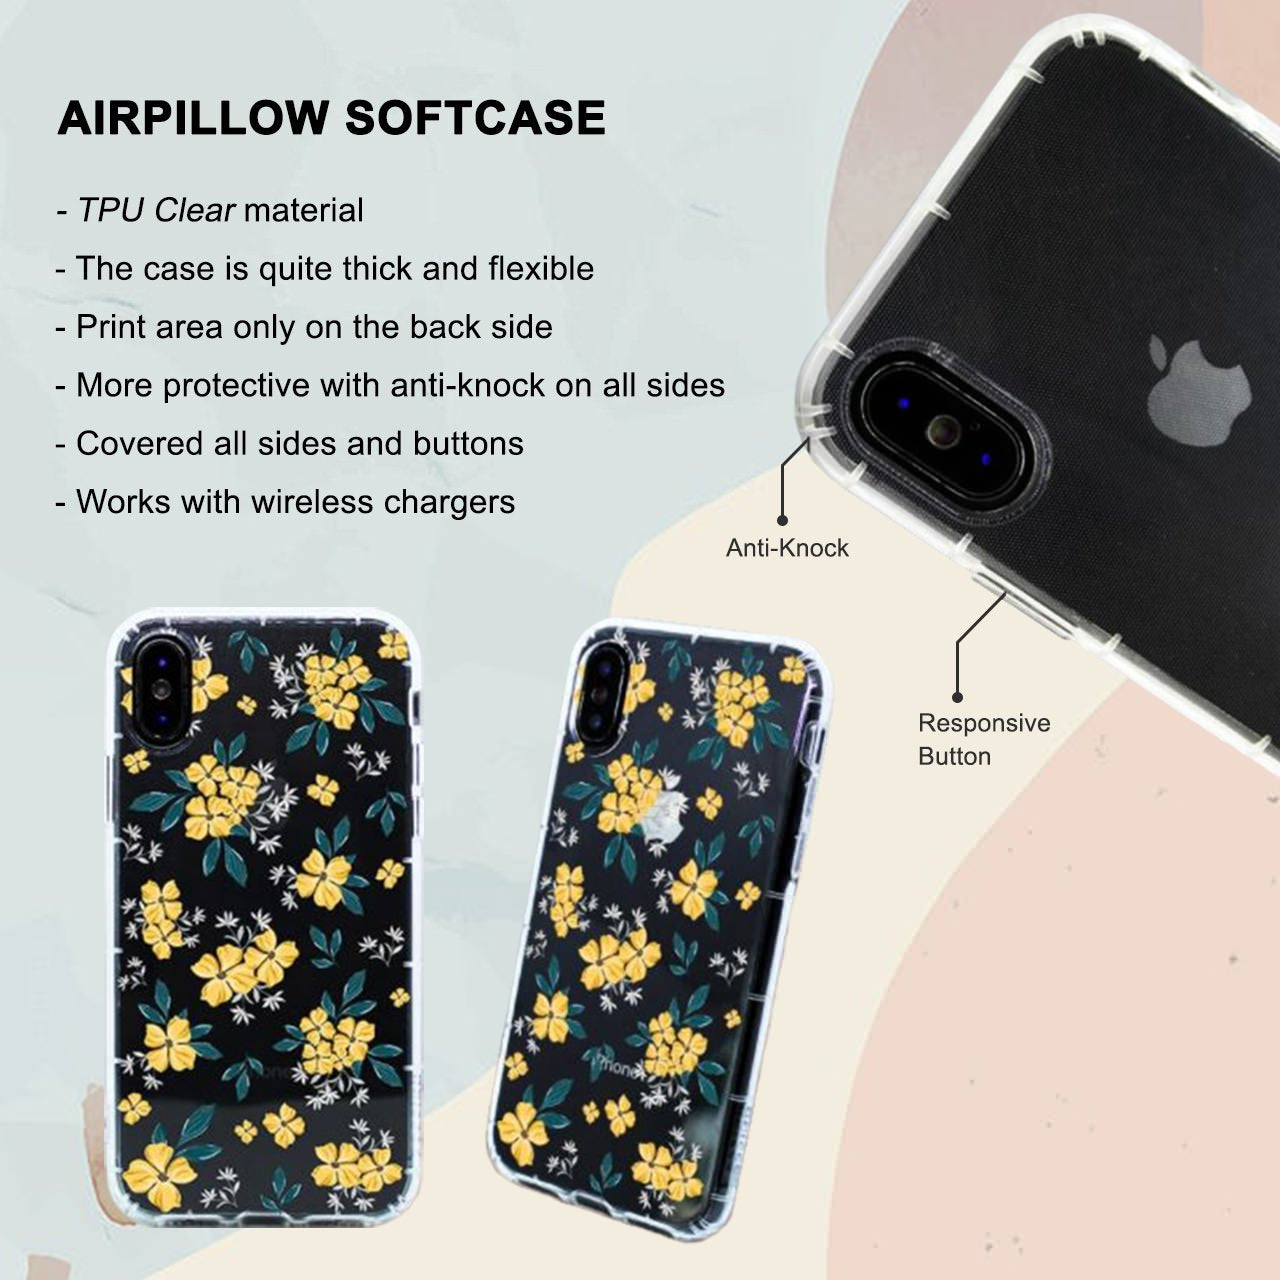 Swirls In The Yellow Sea iPhone 6/6S Case